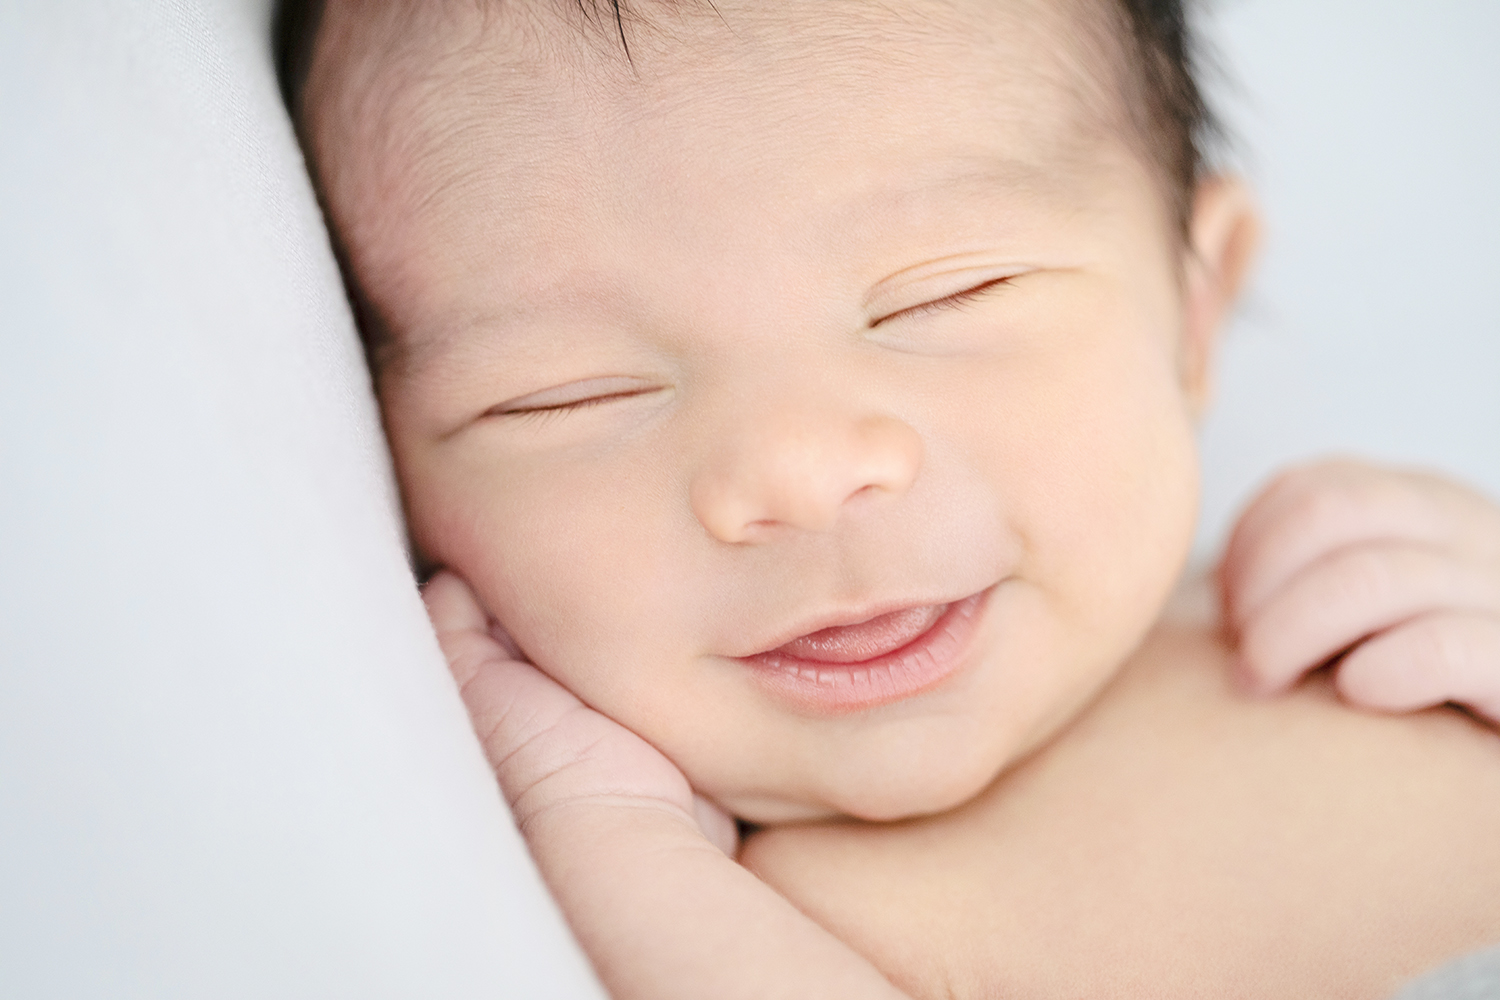 a smiling newborn infant